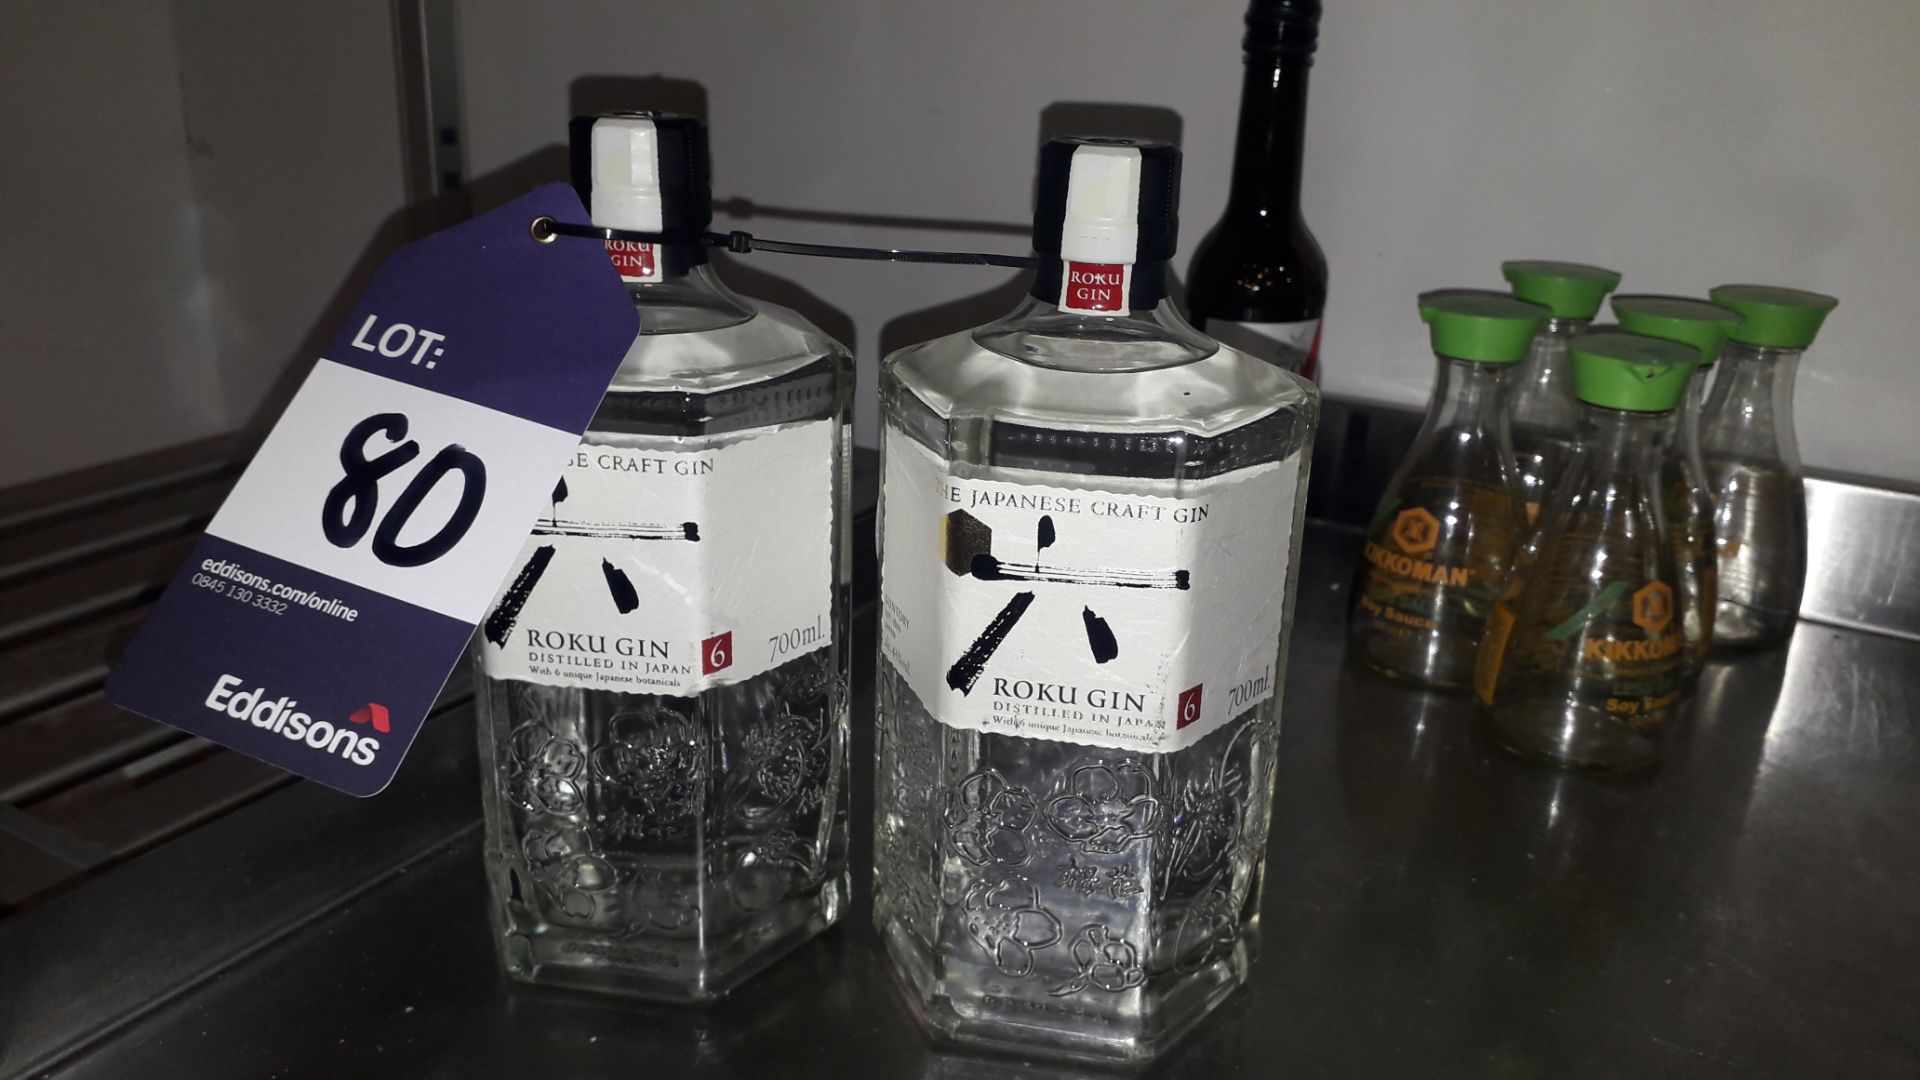 Two Bottles of Roku Gin – Located 85 Scoresby Street, London, SE1 0XN